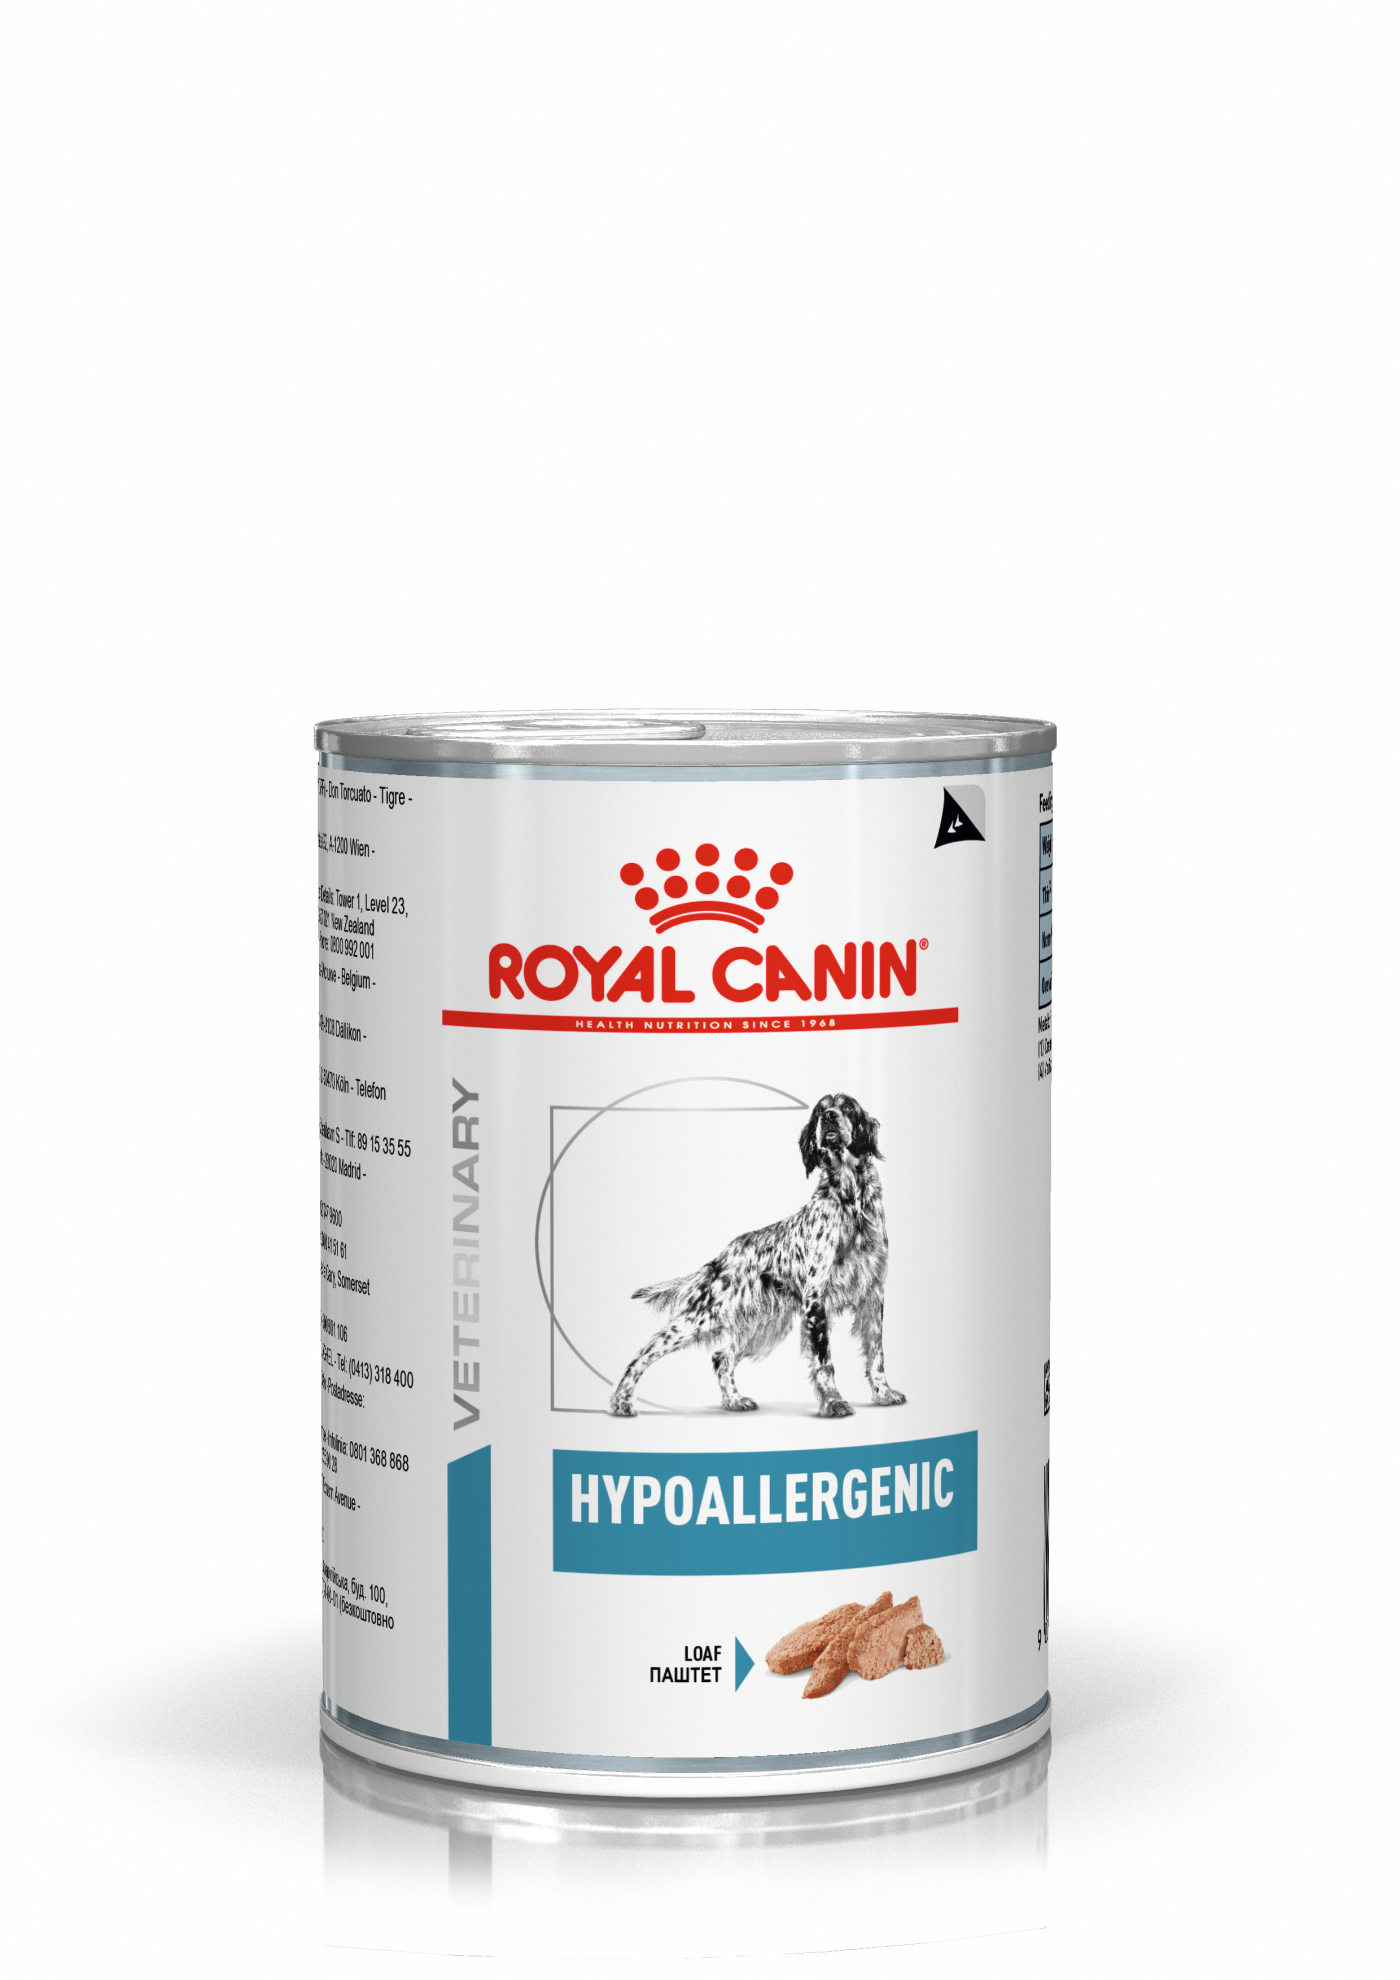 Hypoallergenic dog food - Royal Canin